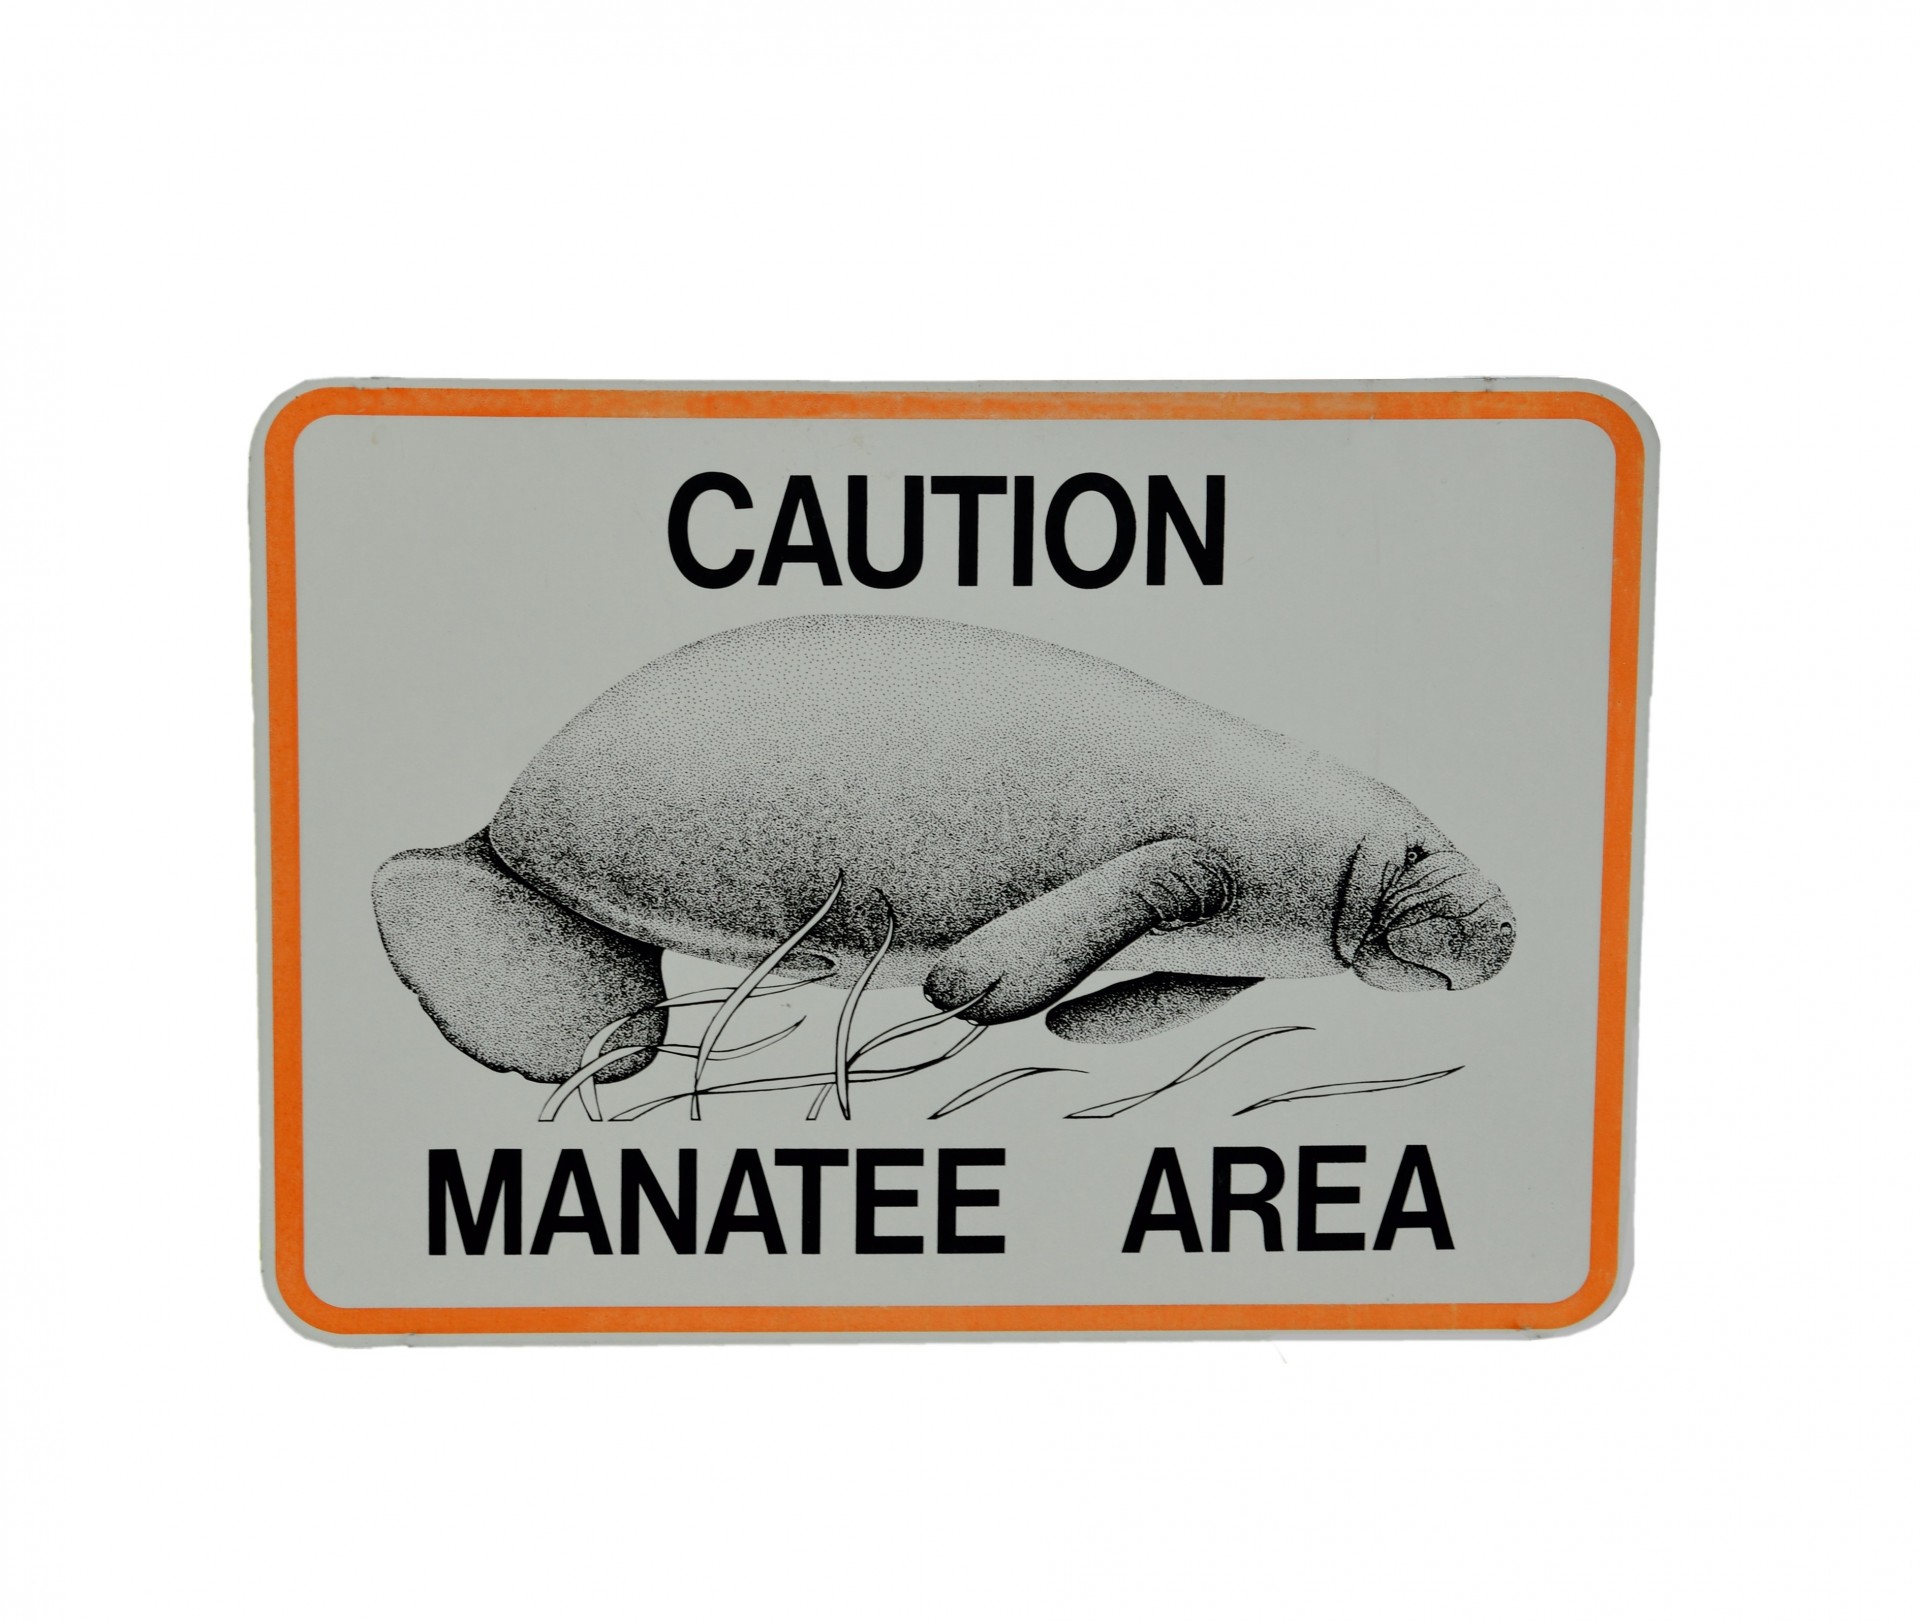 Manatee area sign near the river at Florida, USA